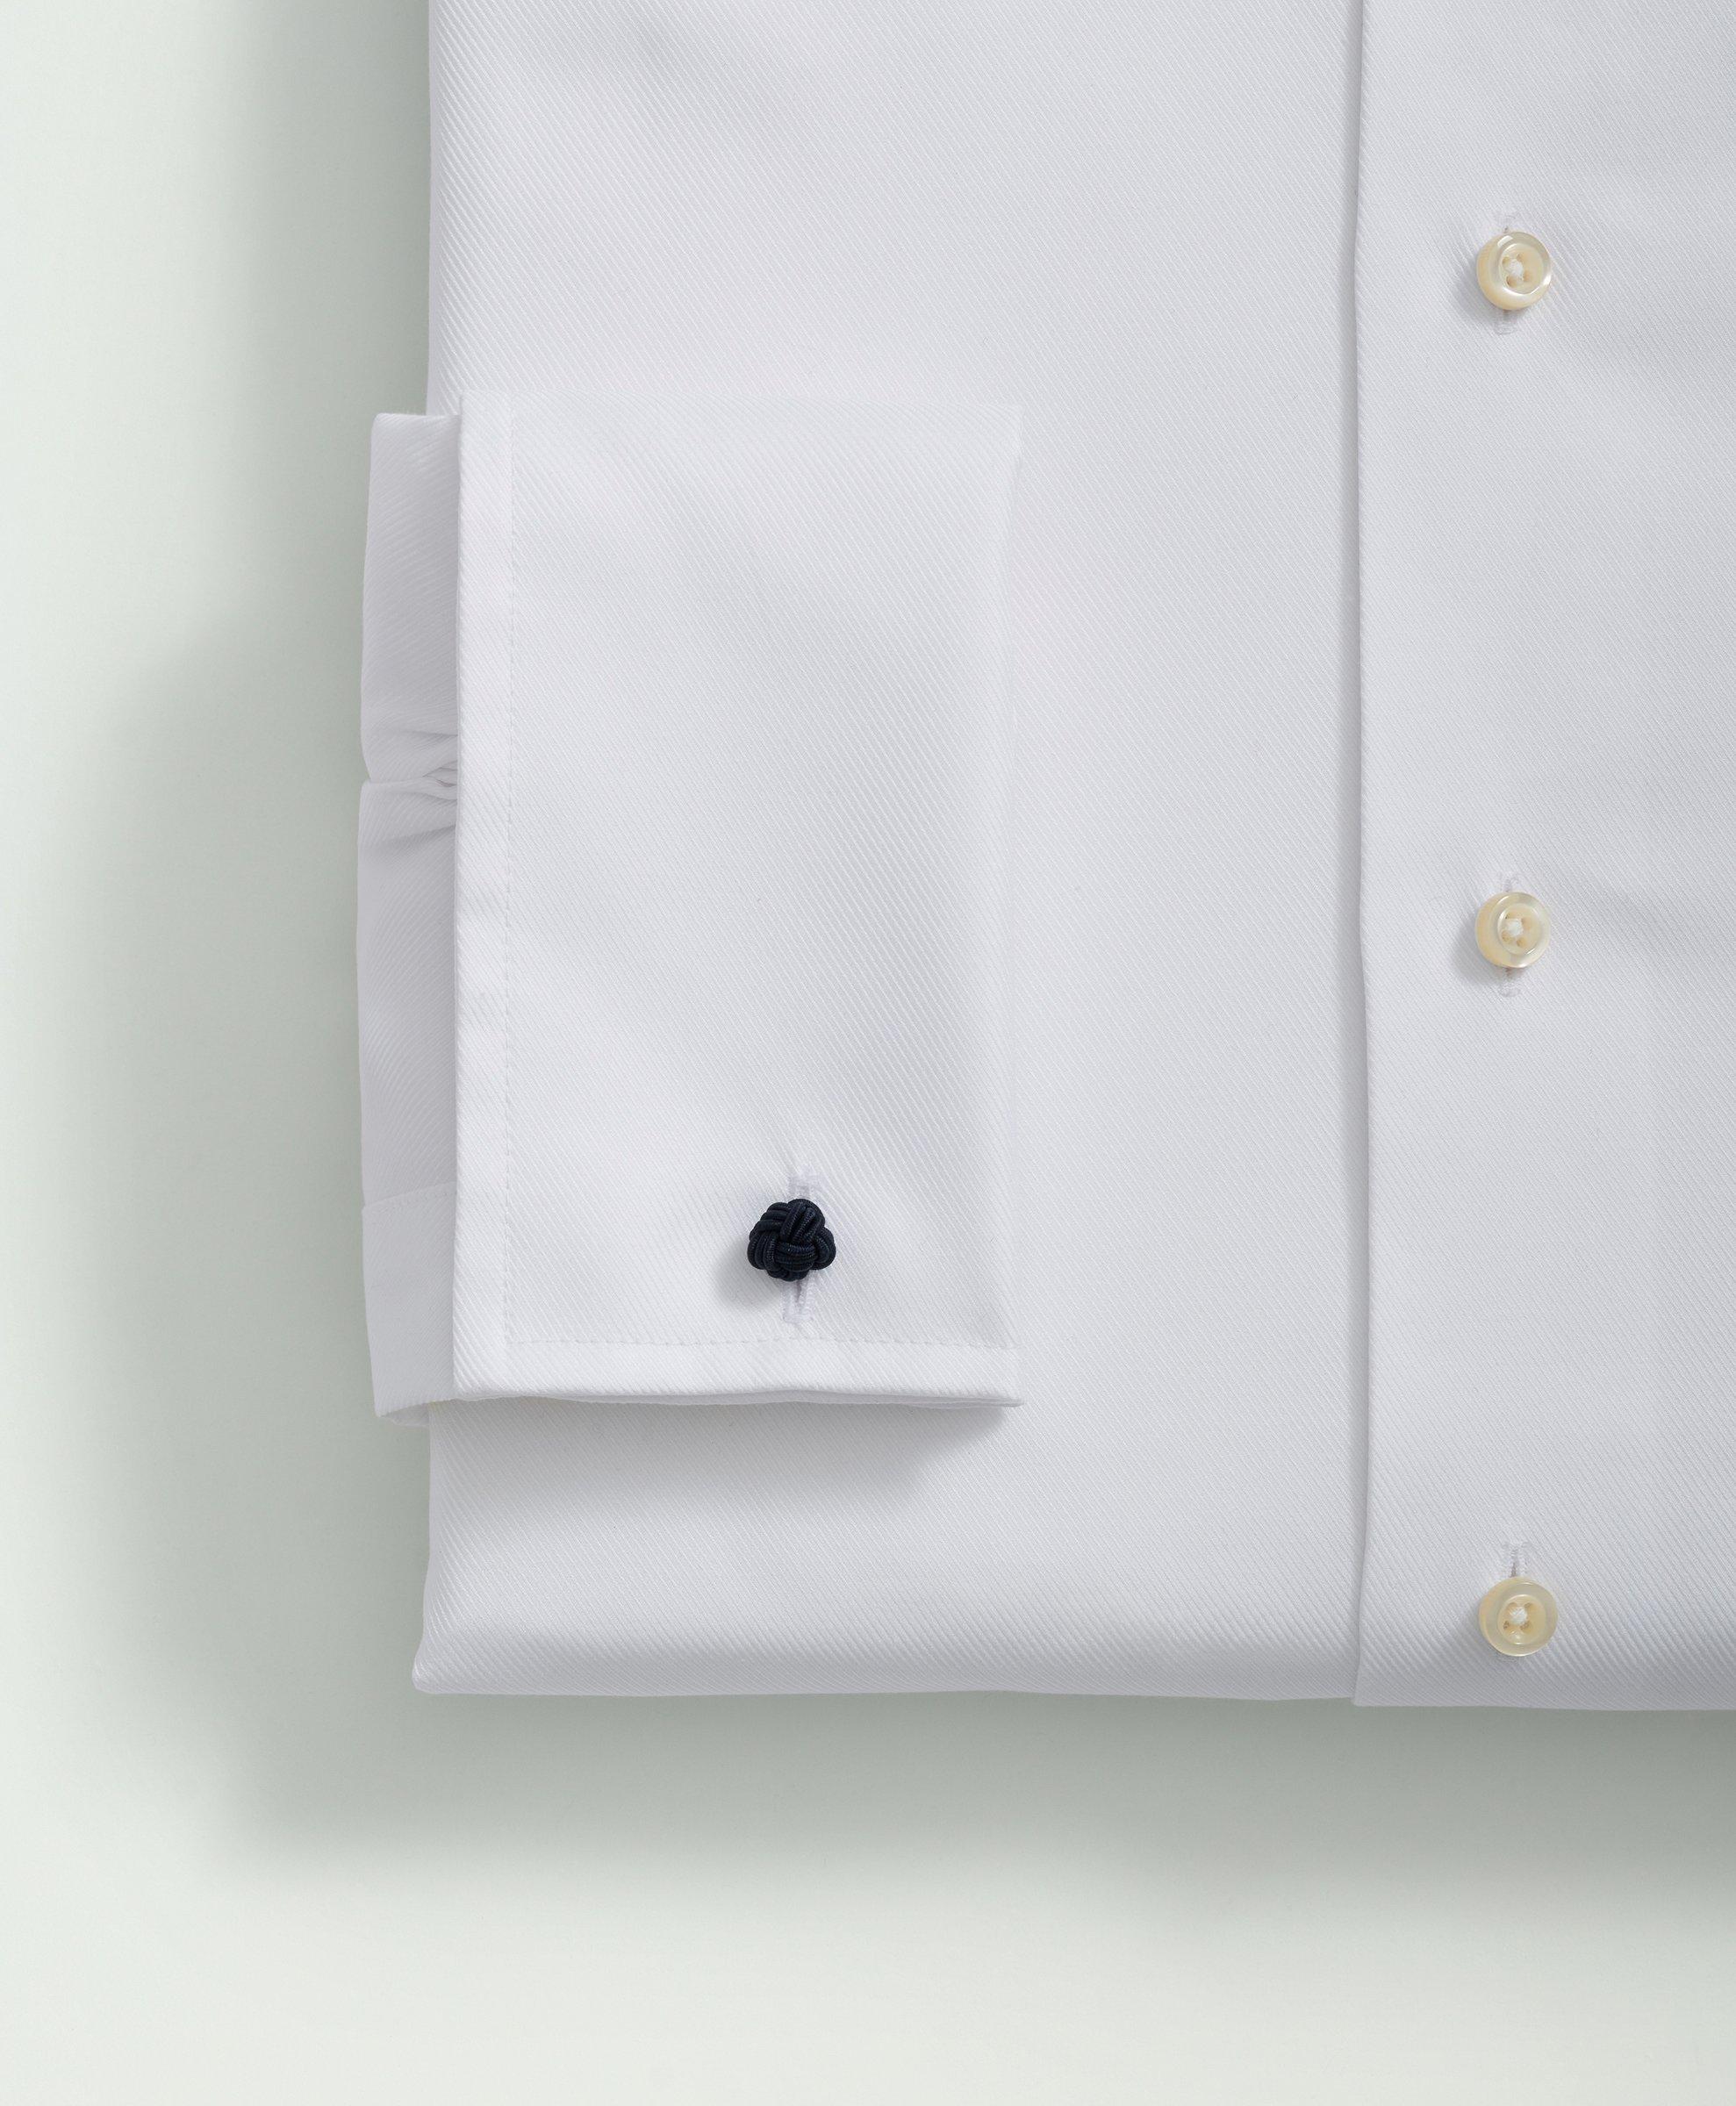 Brooks Brothers X Thomas Mason® Cotton Twill Londoner Collar Dress Shirt